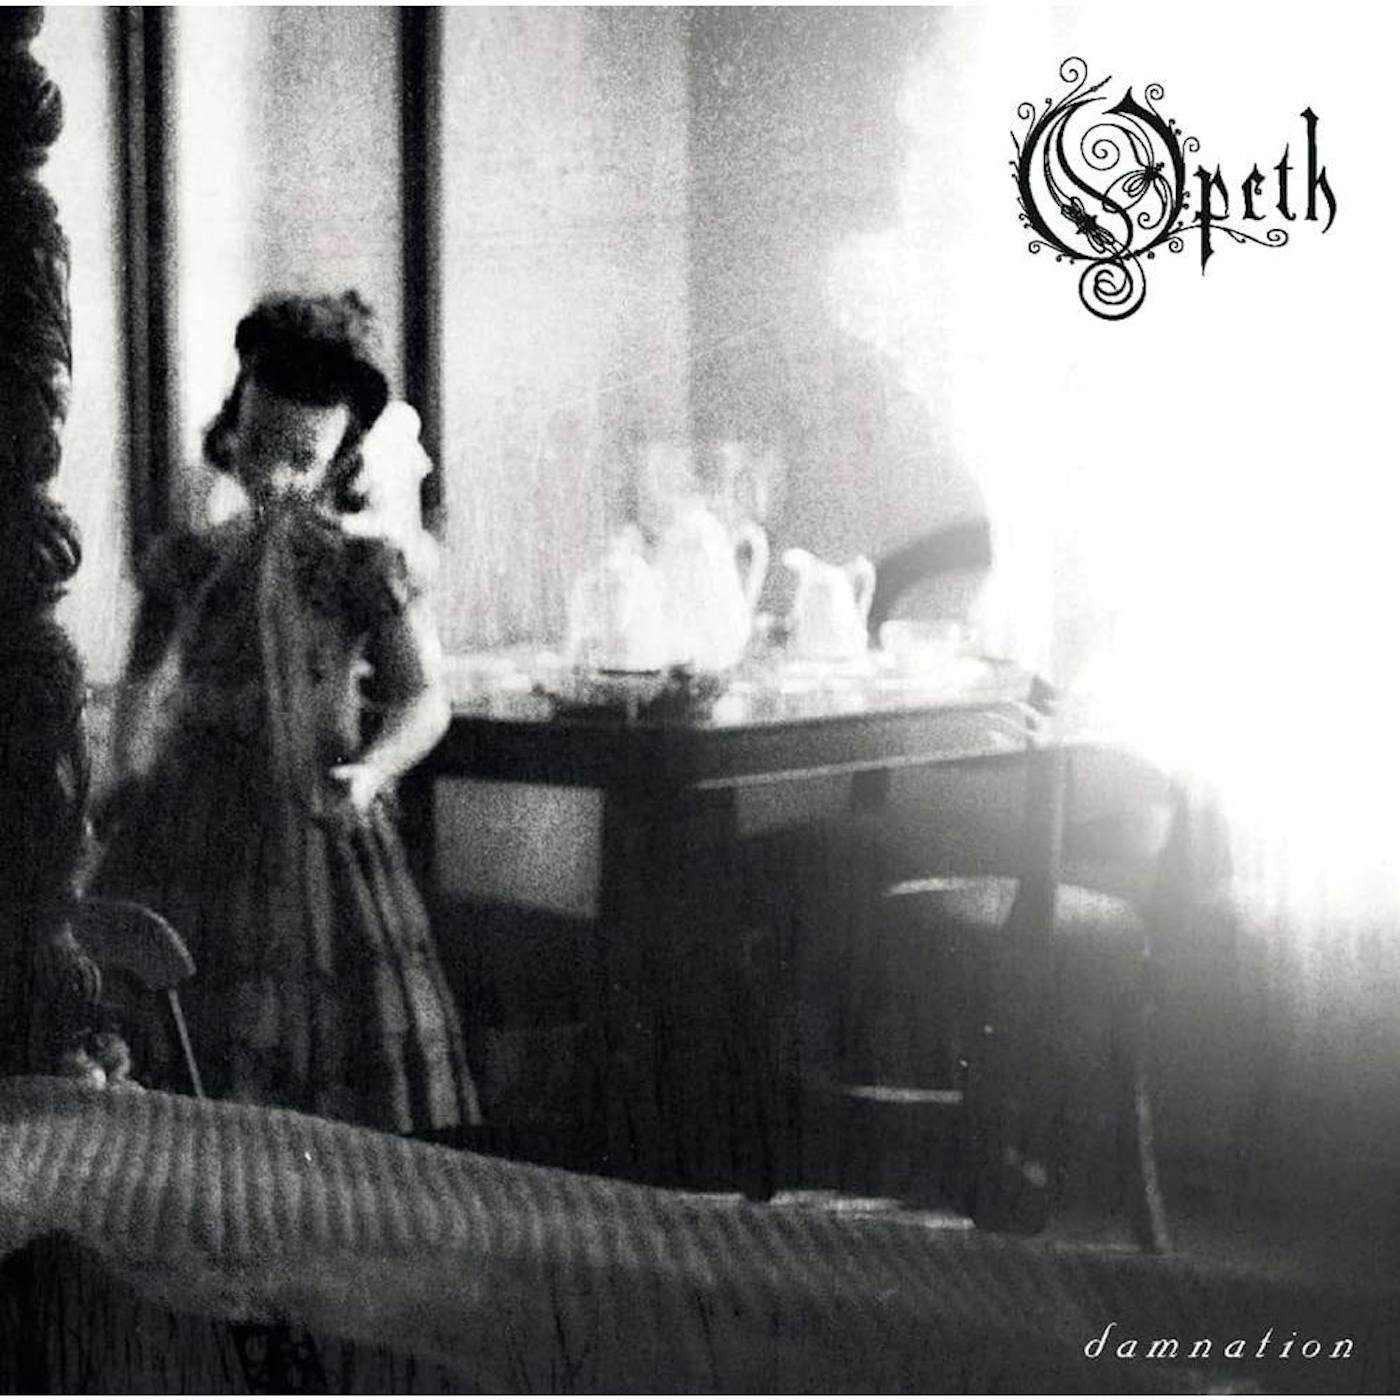 Opeth Damnation (20th Anniversary/180g) Vinyl Record